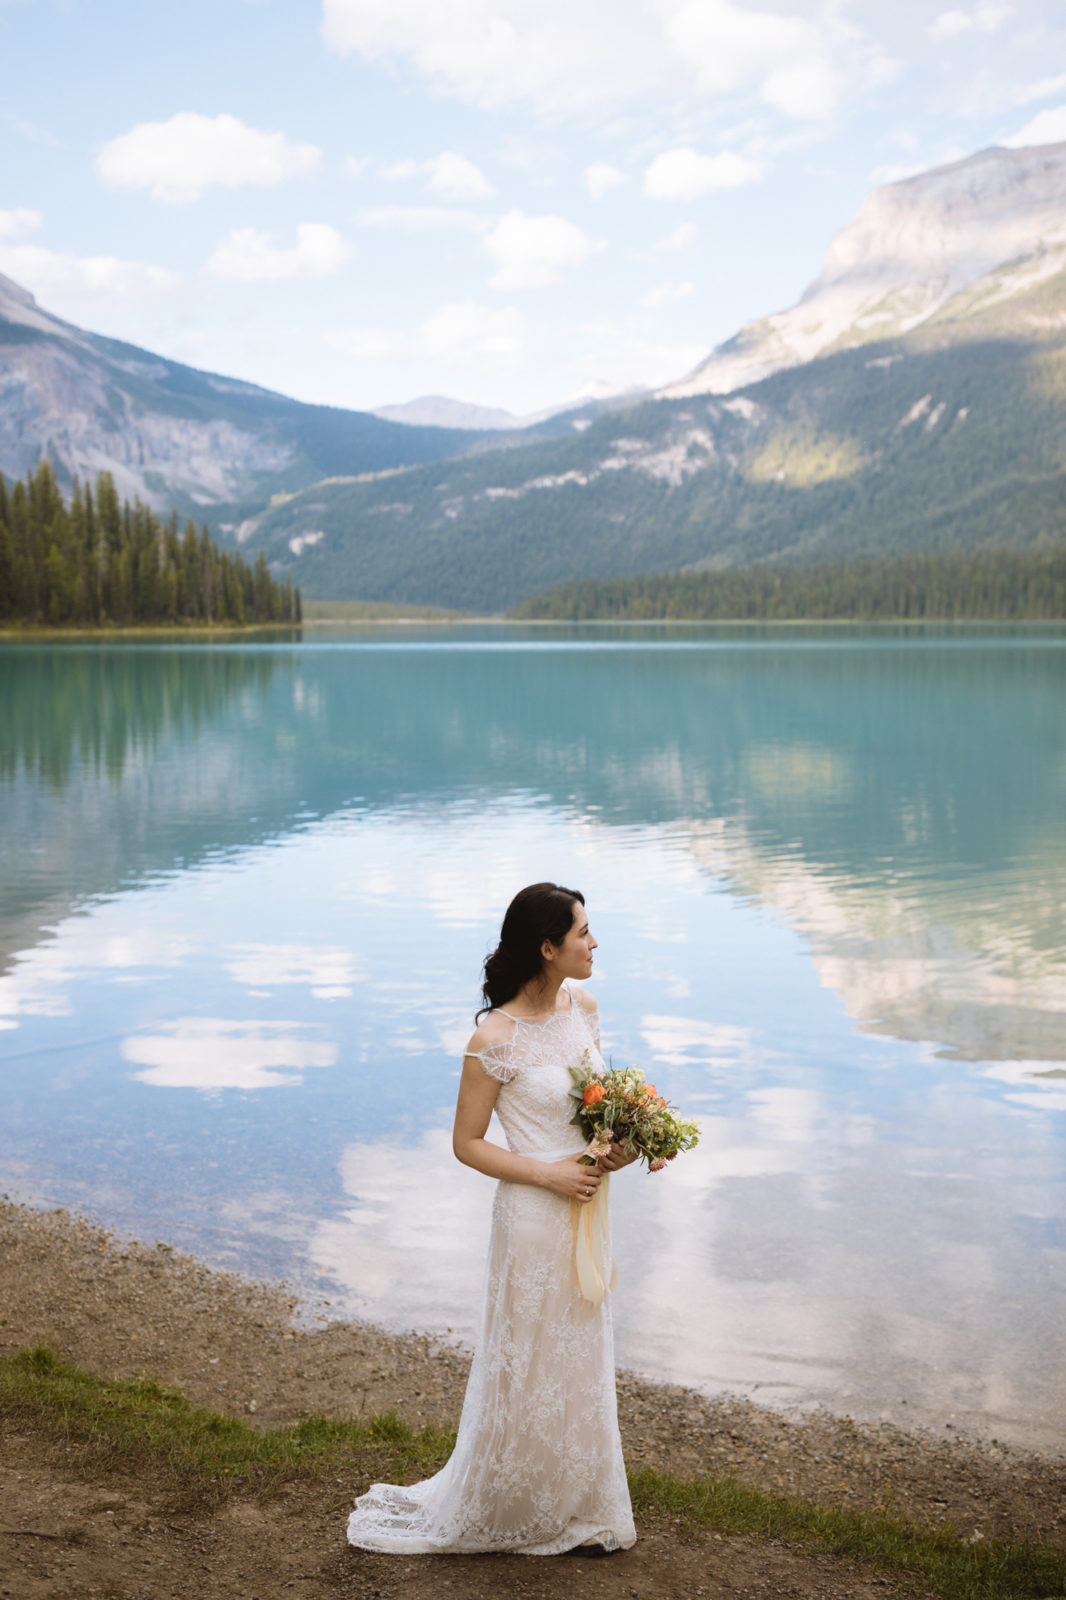 Bride strikes a romantic pose next to Emerald Lake in Yoho National Park